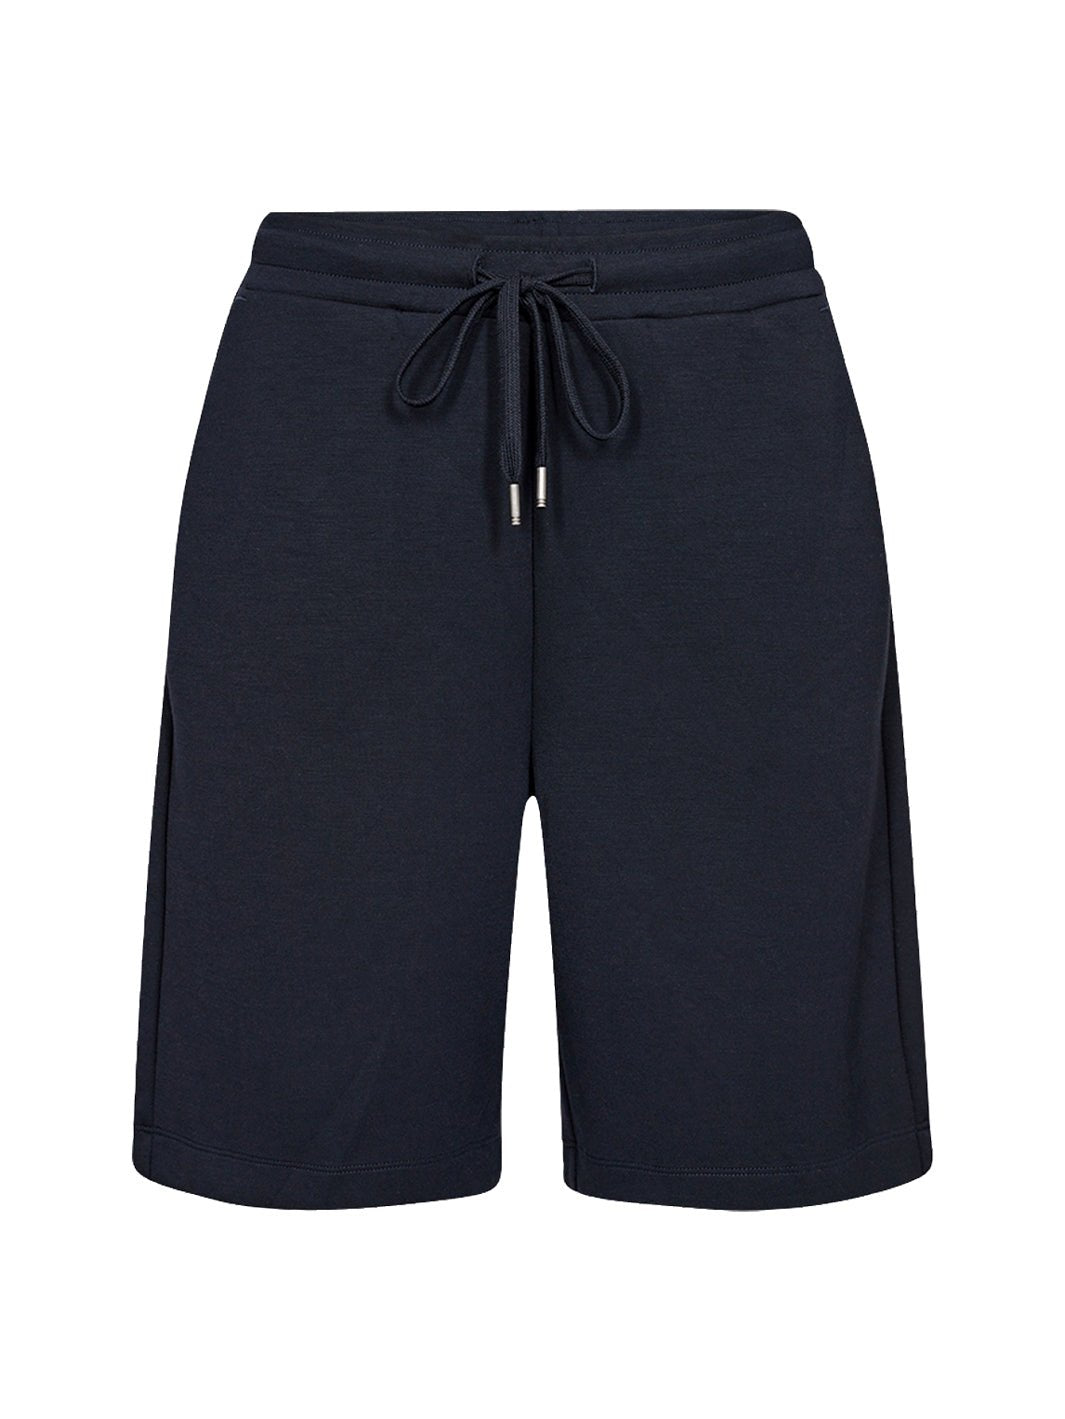 Soya Concept Banu 78 shorts navy - Online-Mode